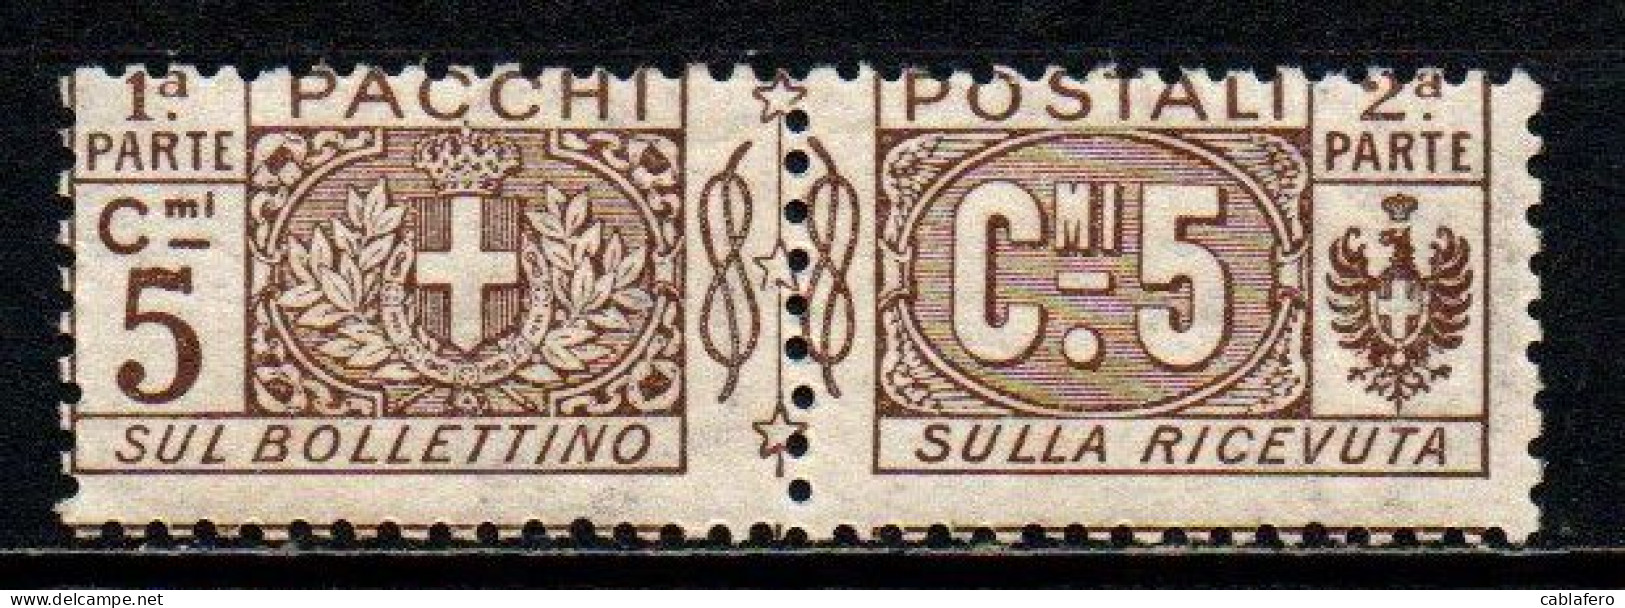 ITALIA REGNO - 1914 - STEMMA E CIFRA - 5 CENT. - MNH - Pacchi Postali